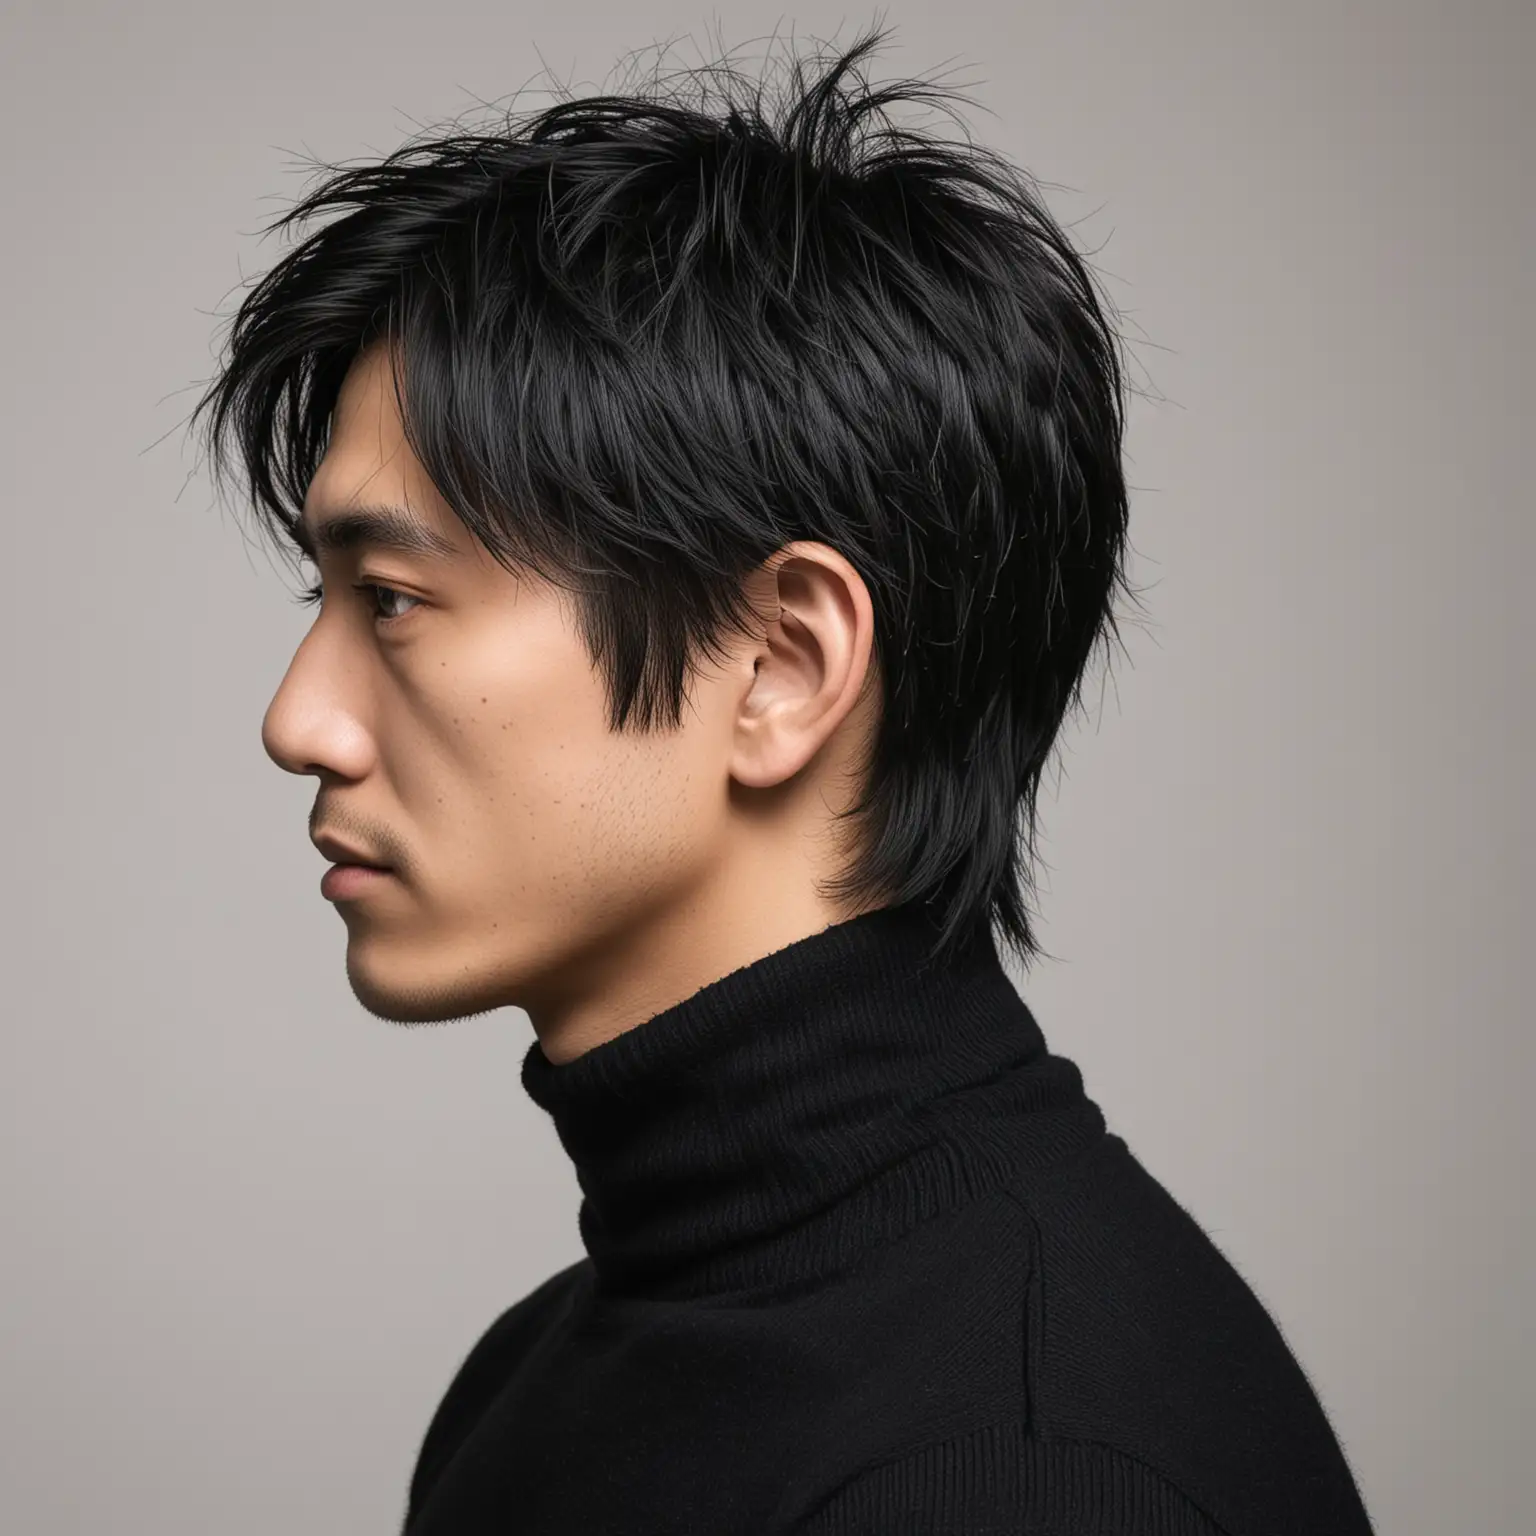 Portrait photograph, side Profile view, Japanese man, harry-potter hair black hair, black turtleneck, white background